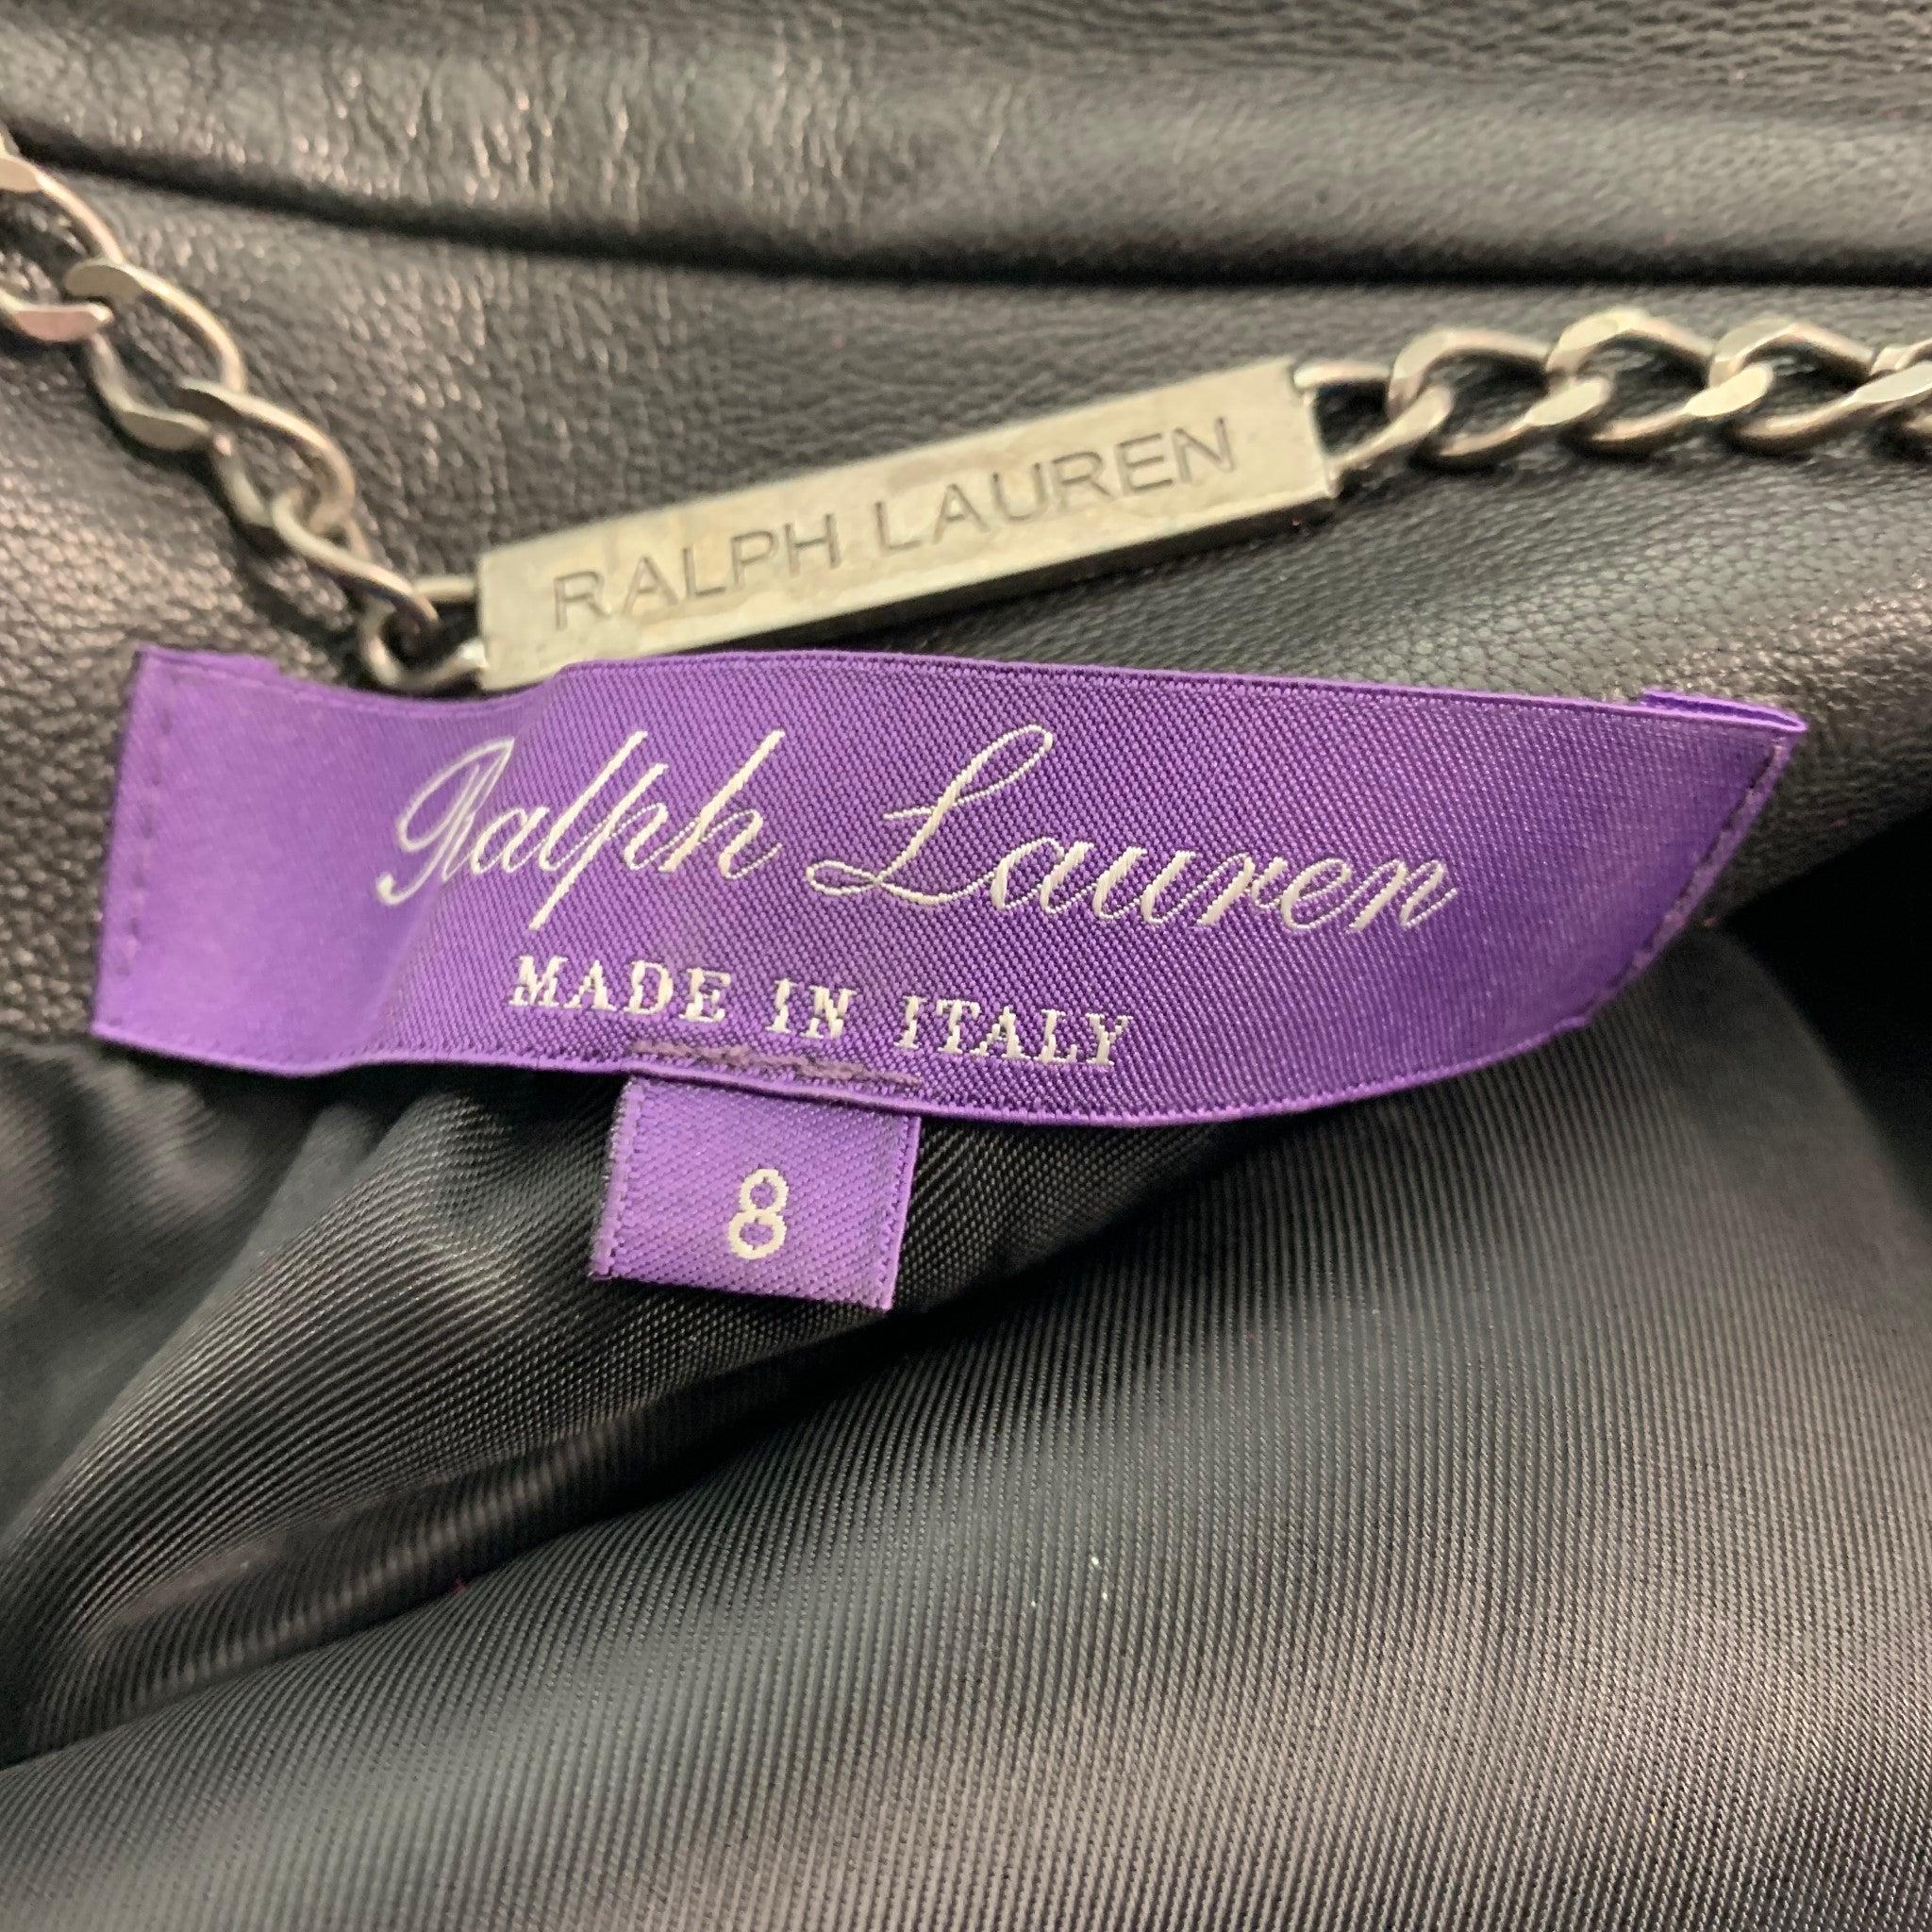 RALPH LAUREN Size 8 Black Studded Leather Zip Up Jacket For Sale 4